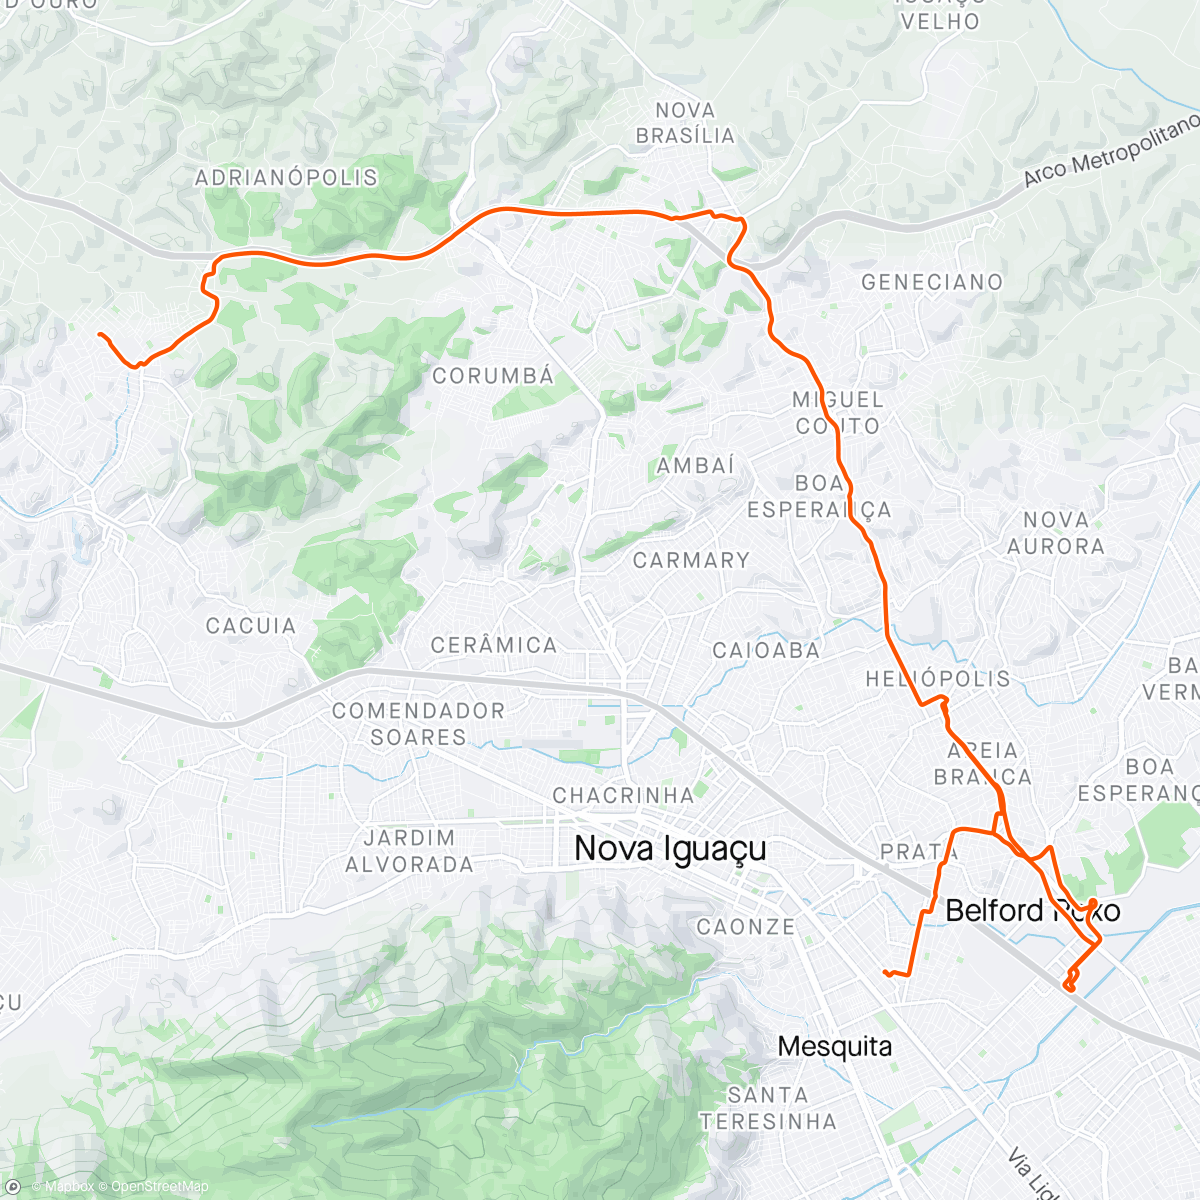 Mappa dell'attività Bike Night Belford Roxo / Heliópolis em chamas.